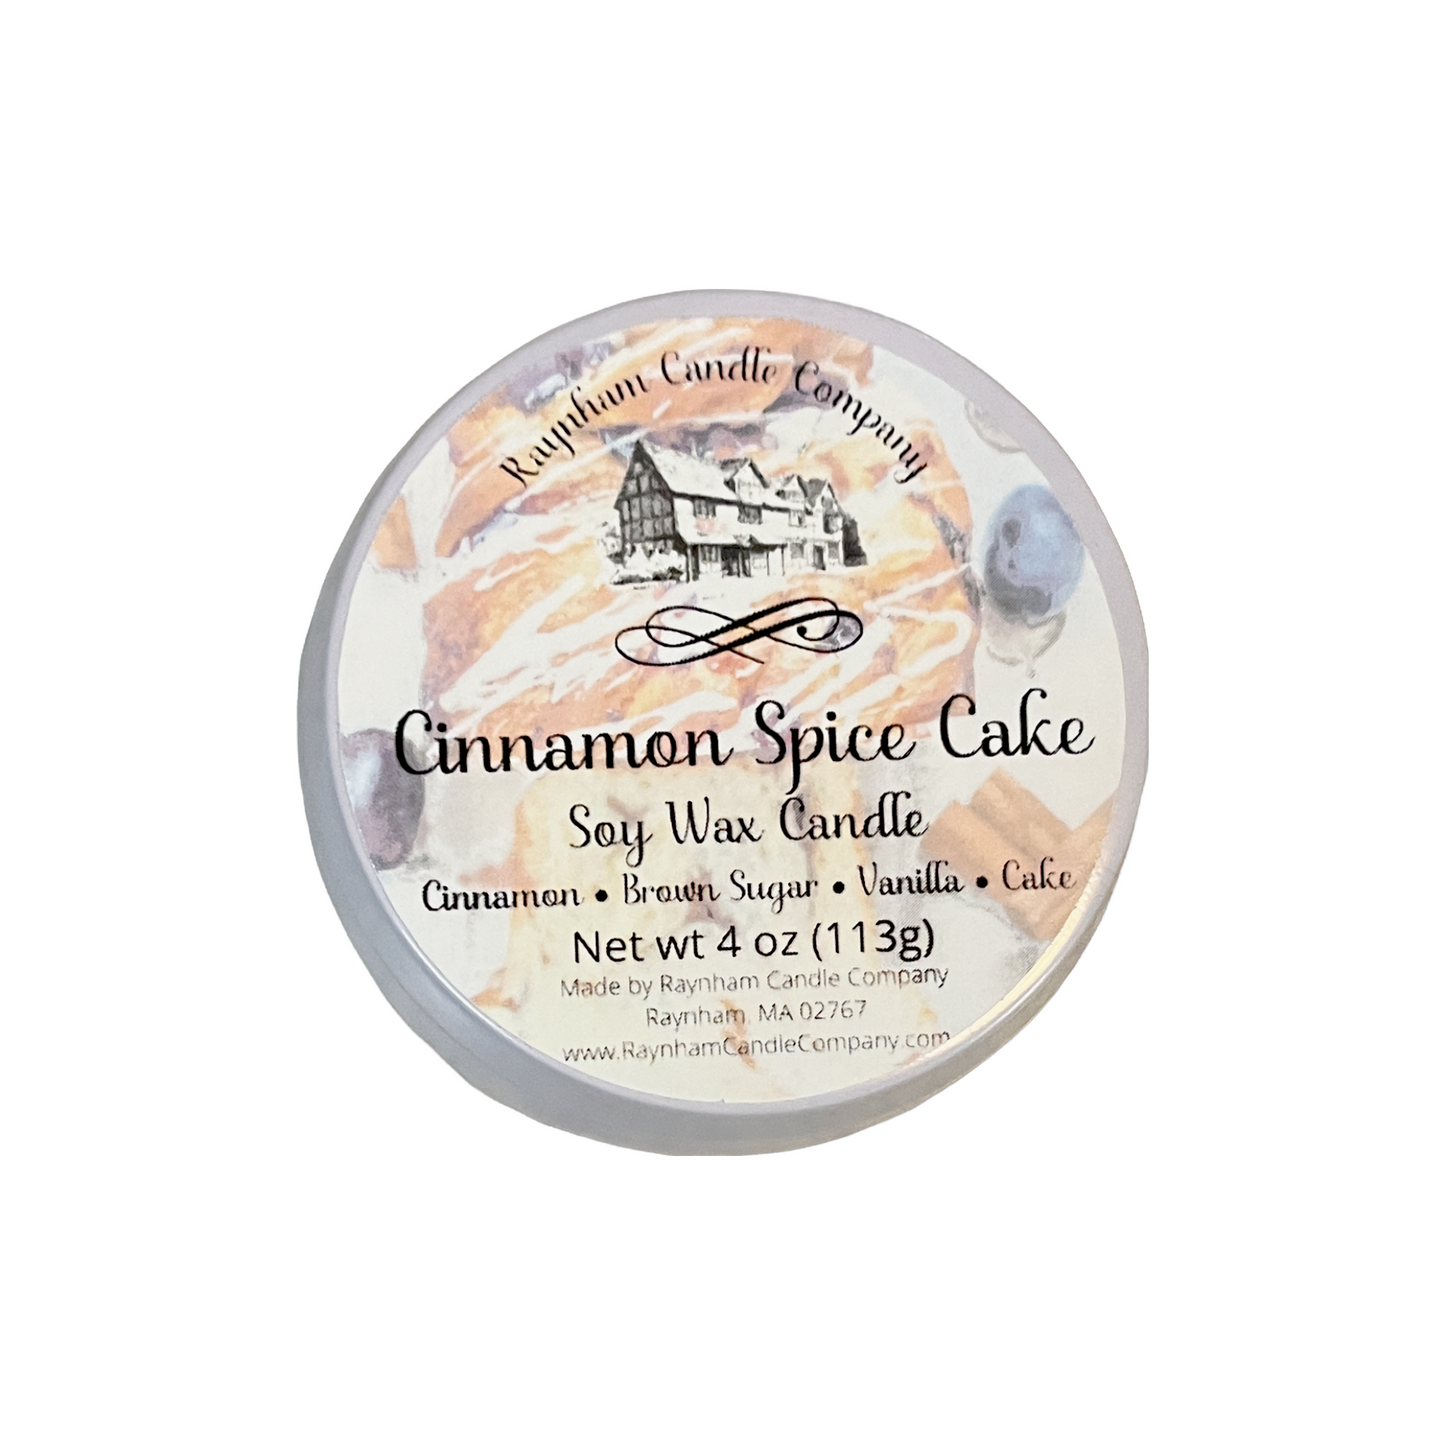 Cinnamon Spice Cake